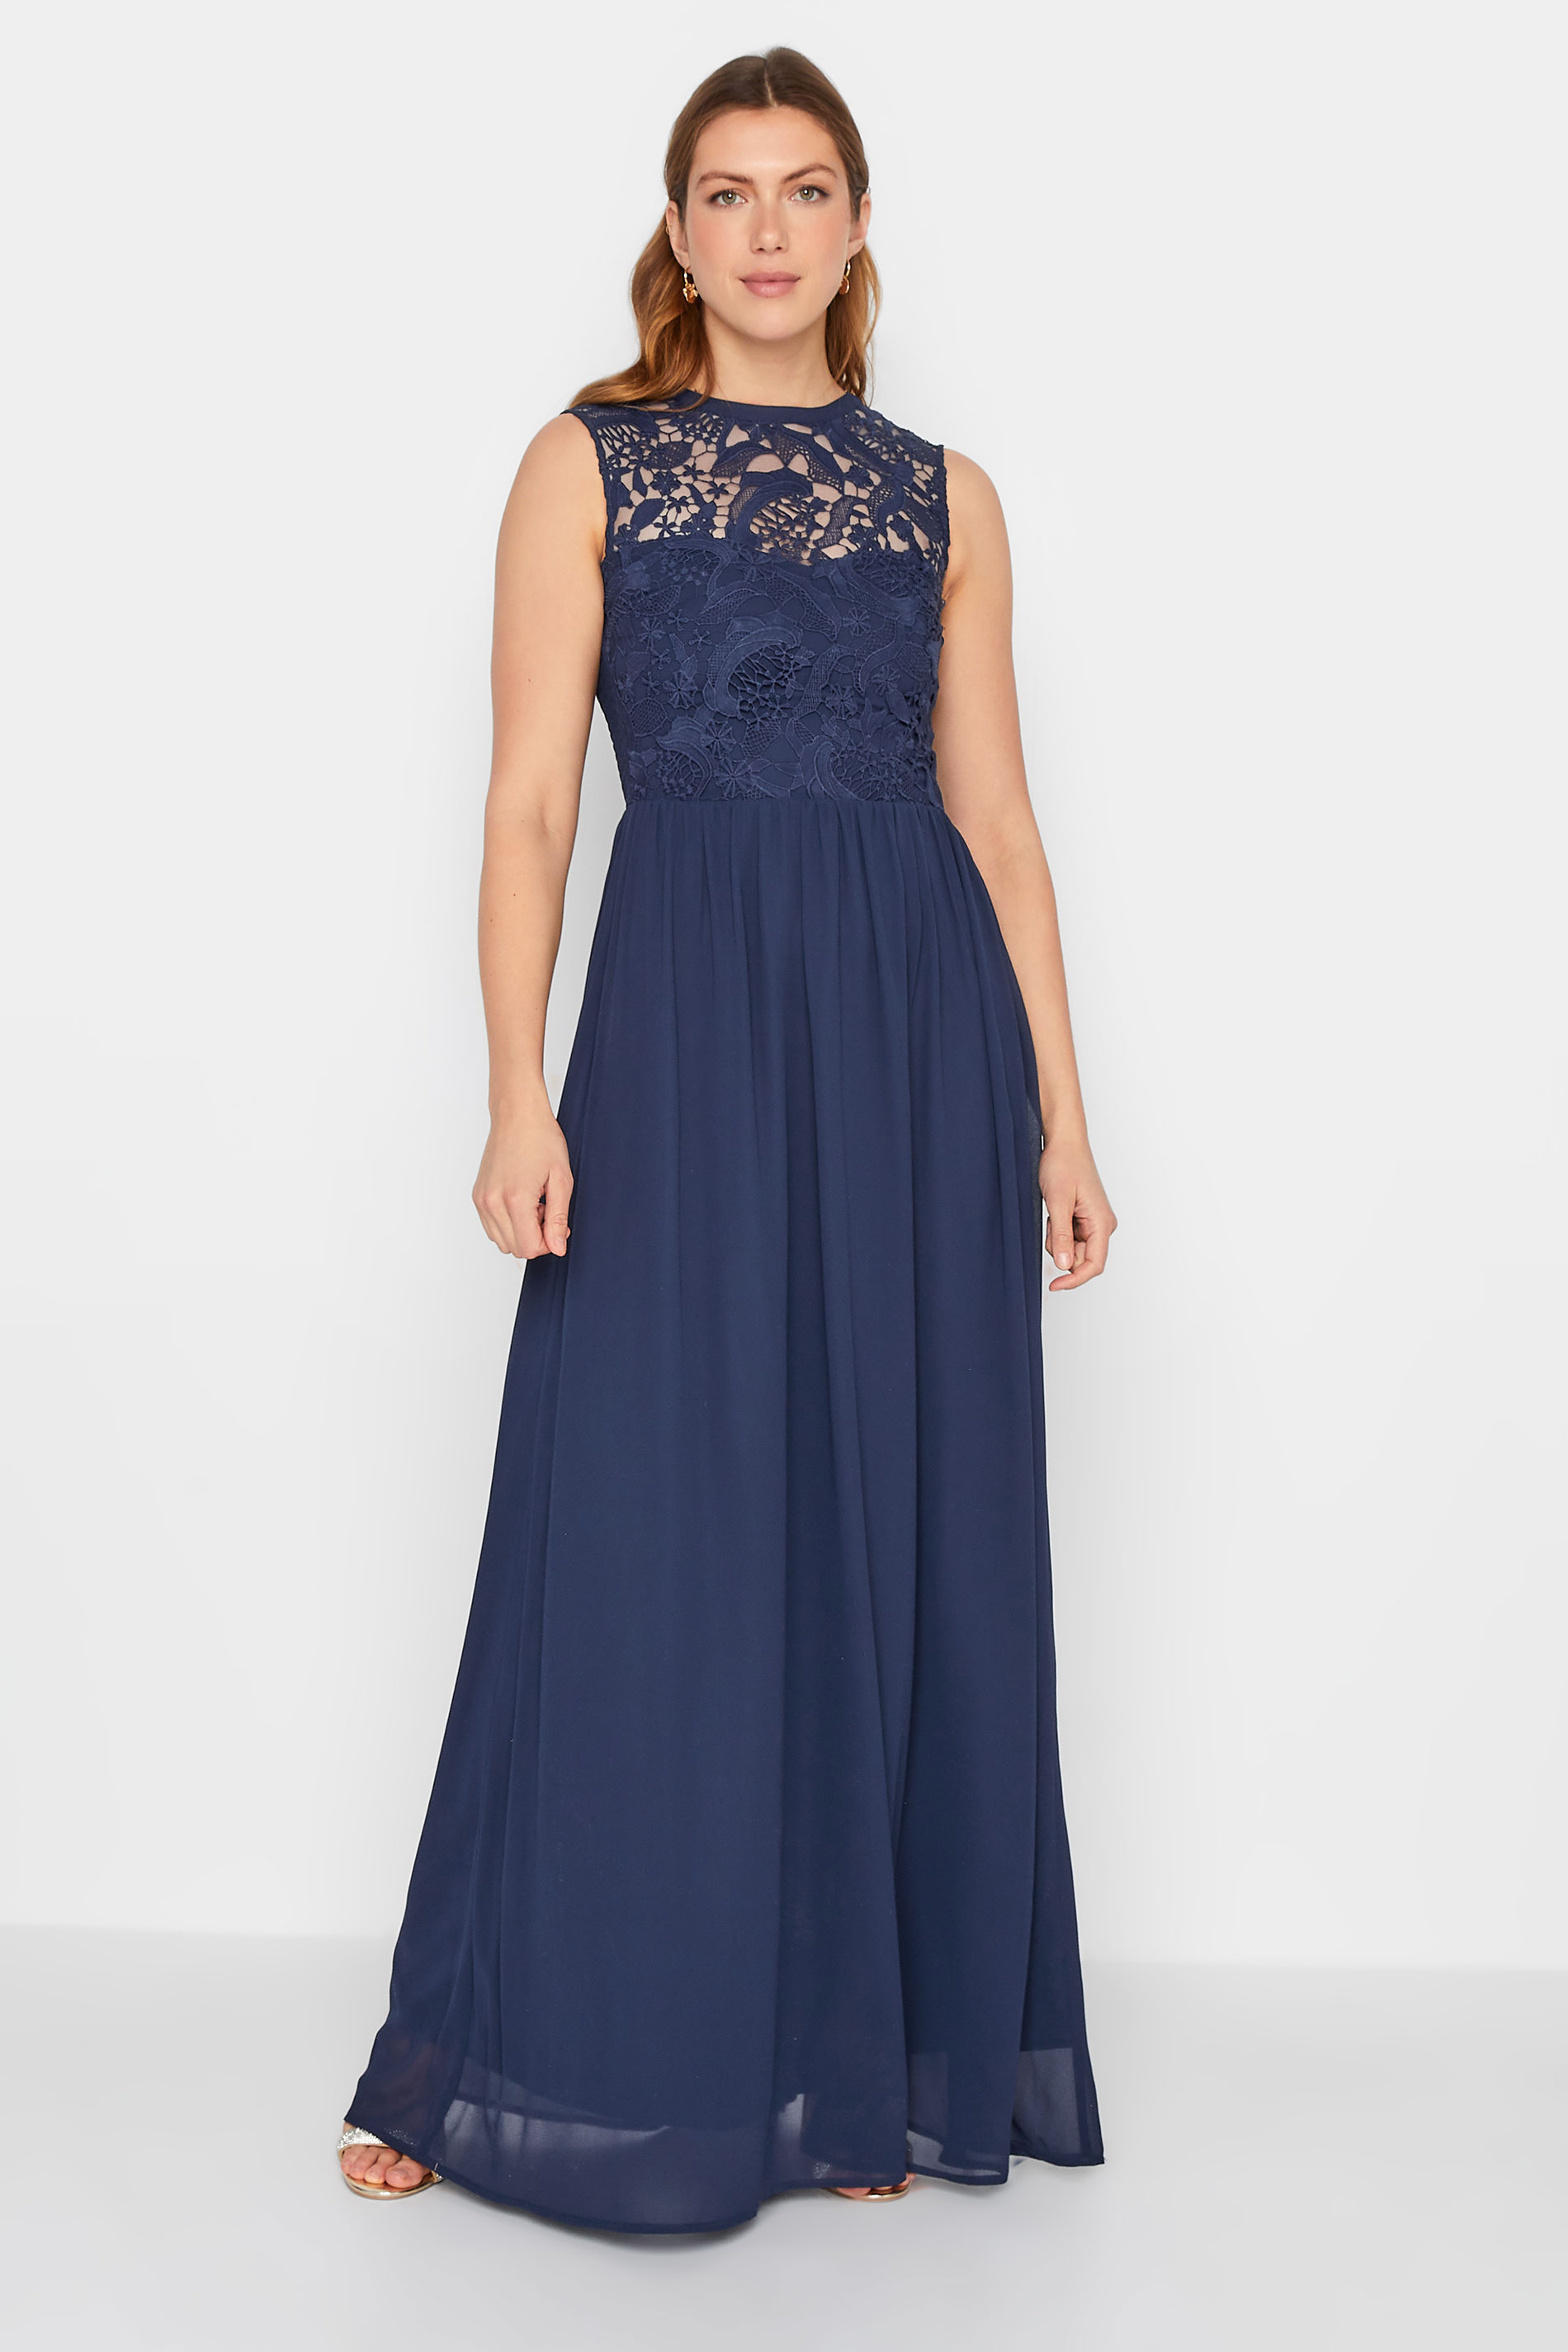 LTS Tall Women's Navy Blue Lace Chiffon Maxi Dress | Long Tall Sally  2